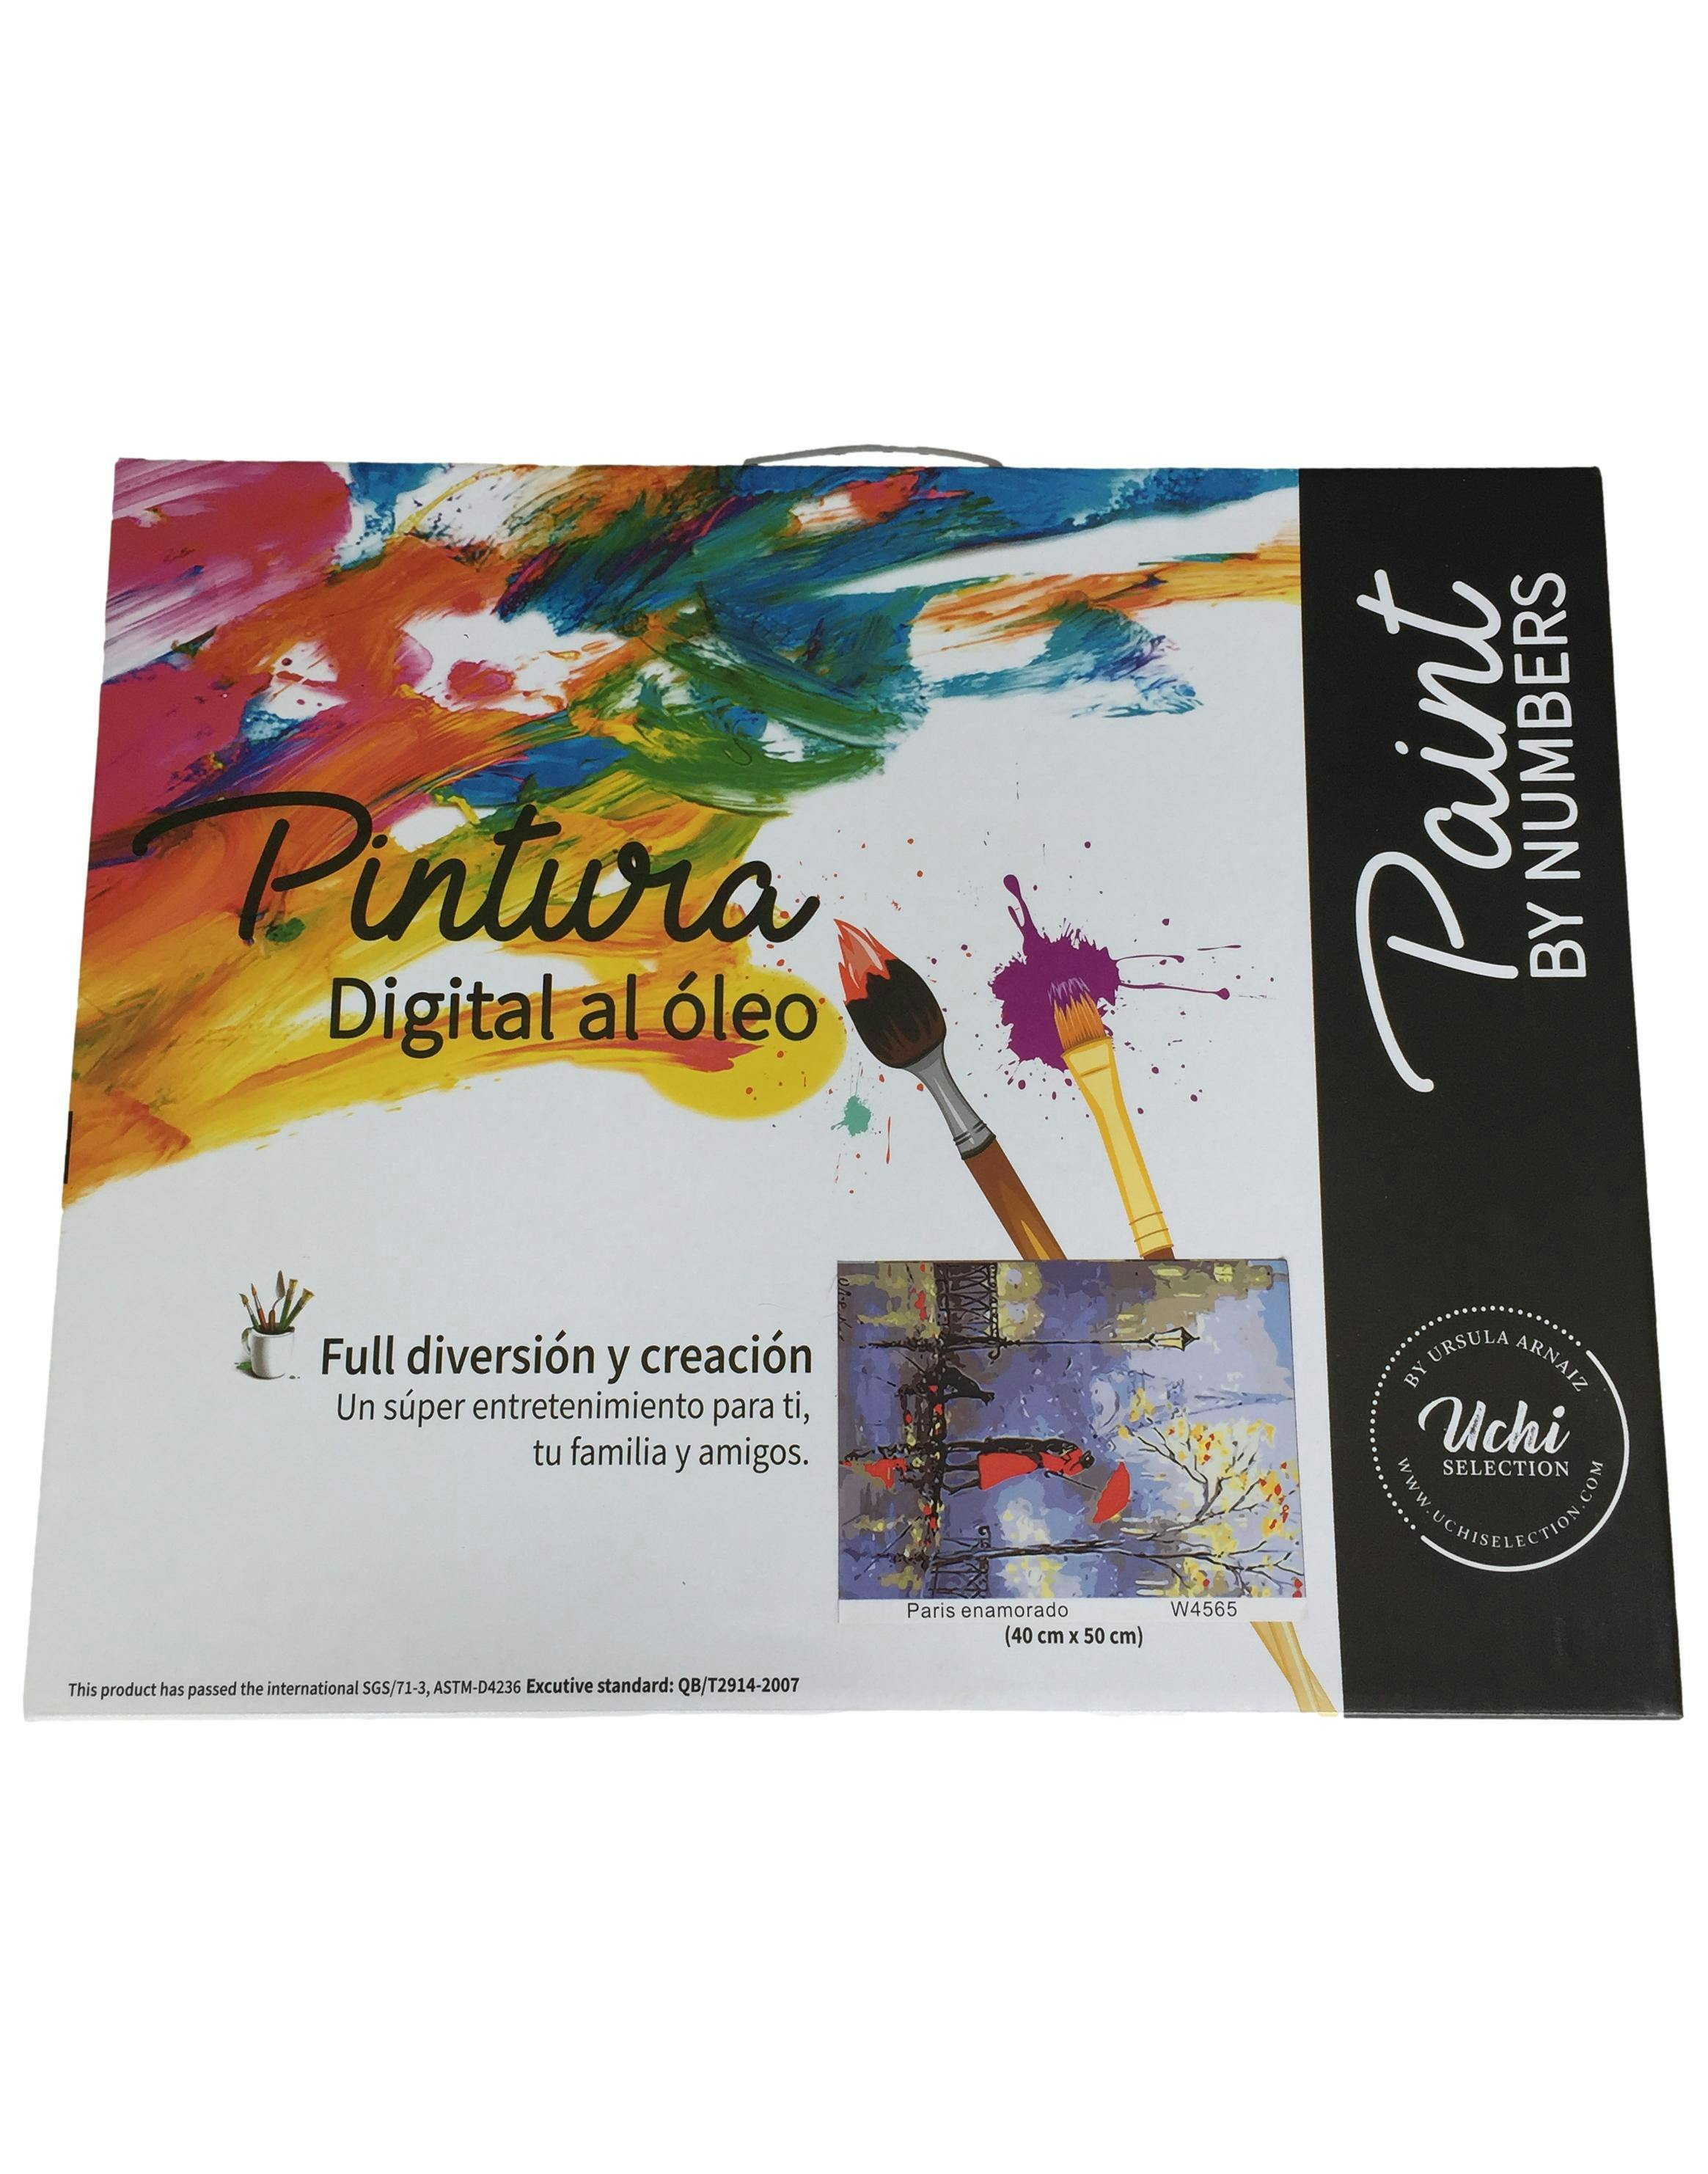 Kit Pintura digital al óleo, lienzo 40x50cm , pinceles y puntiras. Nuevo